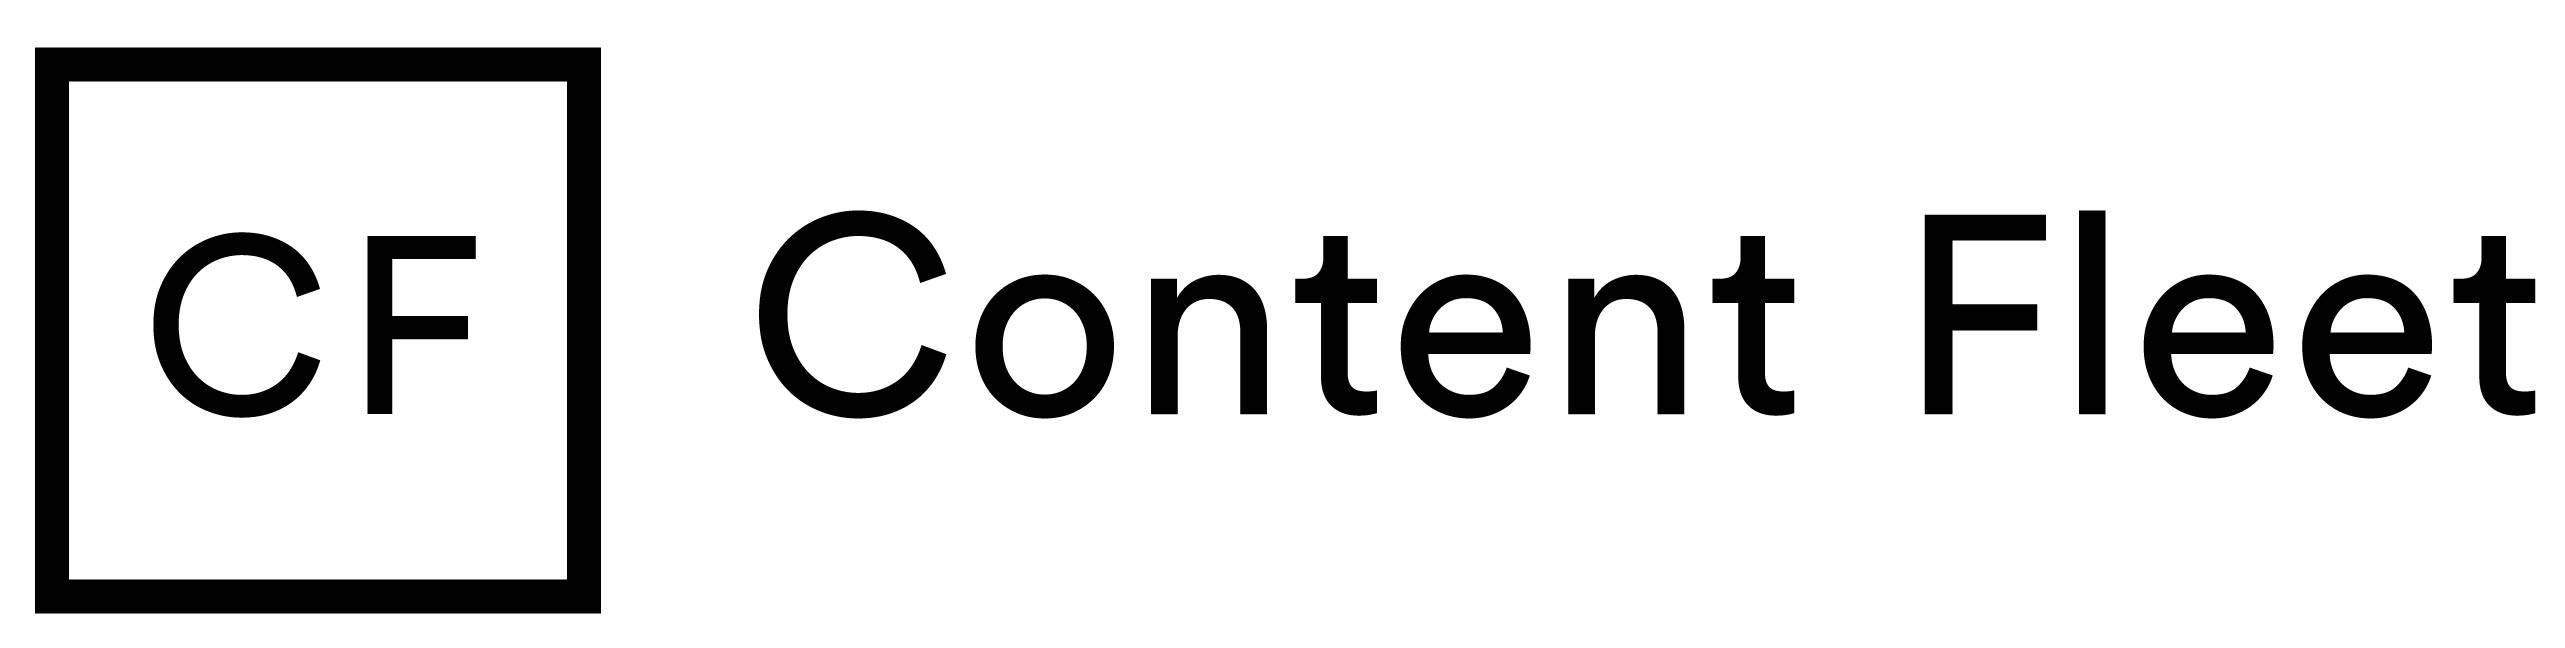 (c) Contentfleet.com